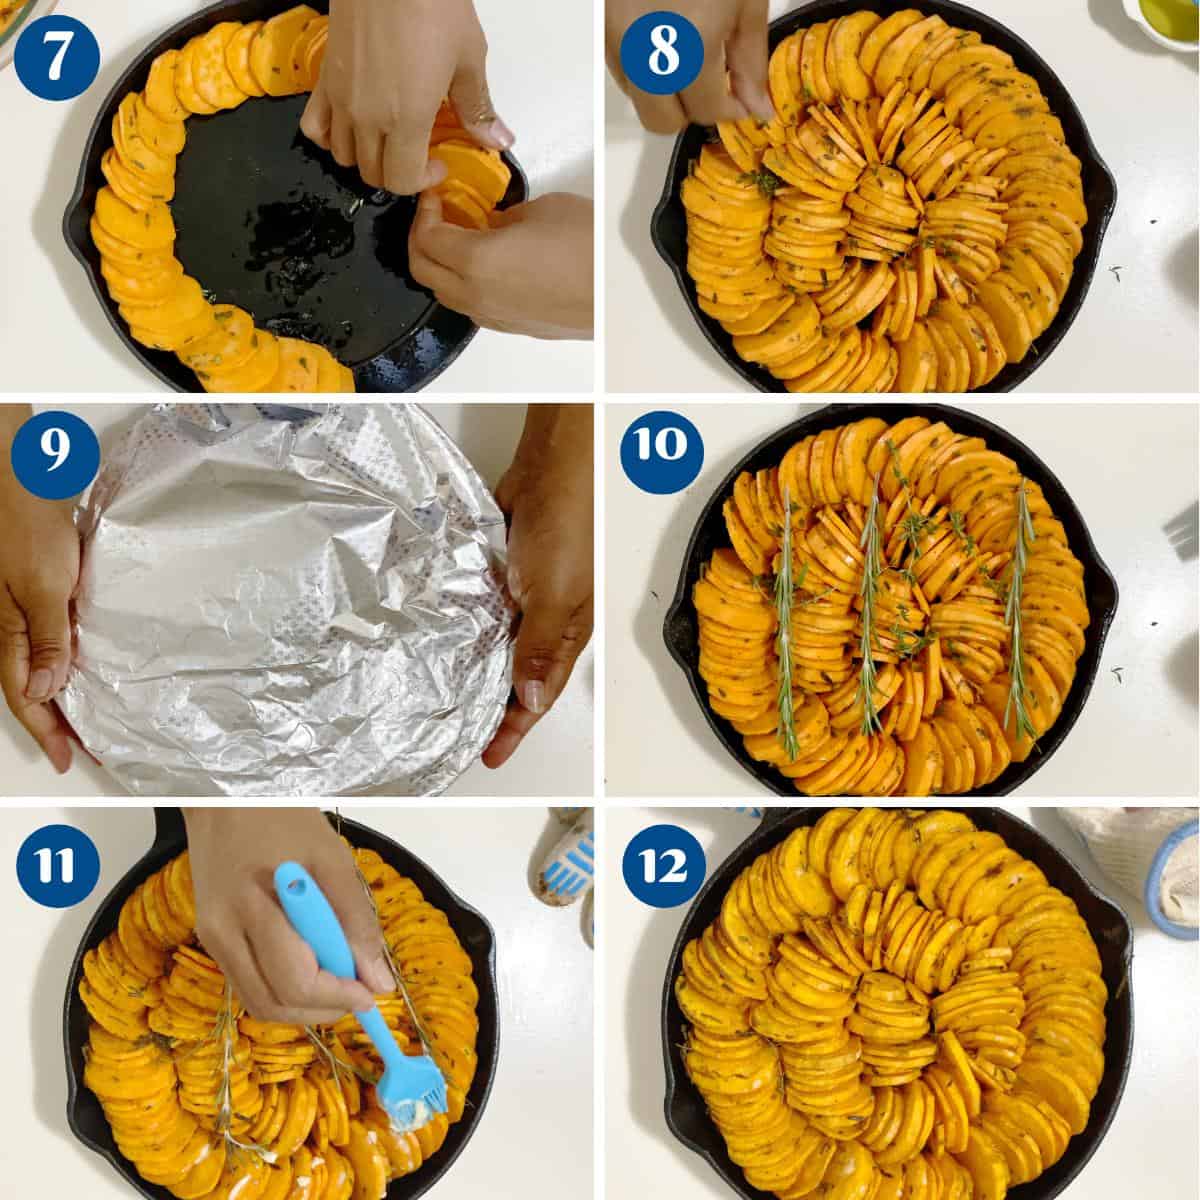 Progress pictures baking the sweet potato slices.